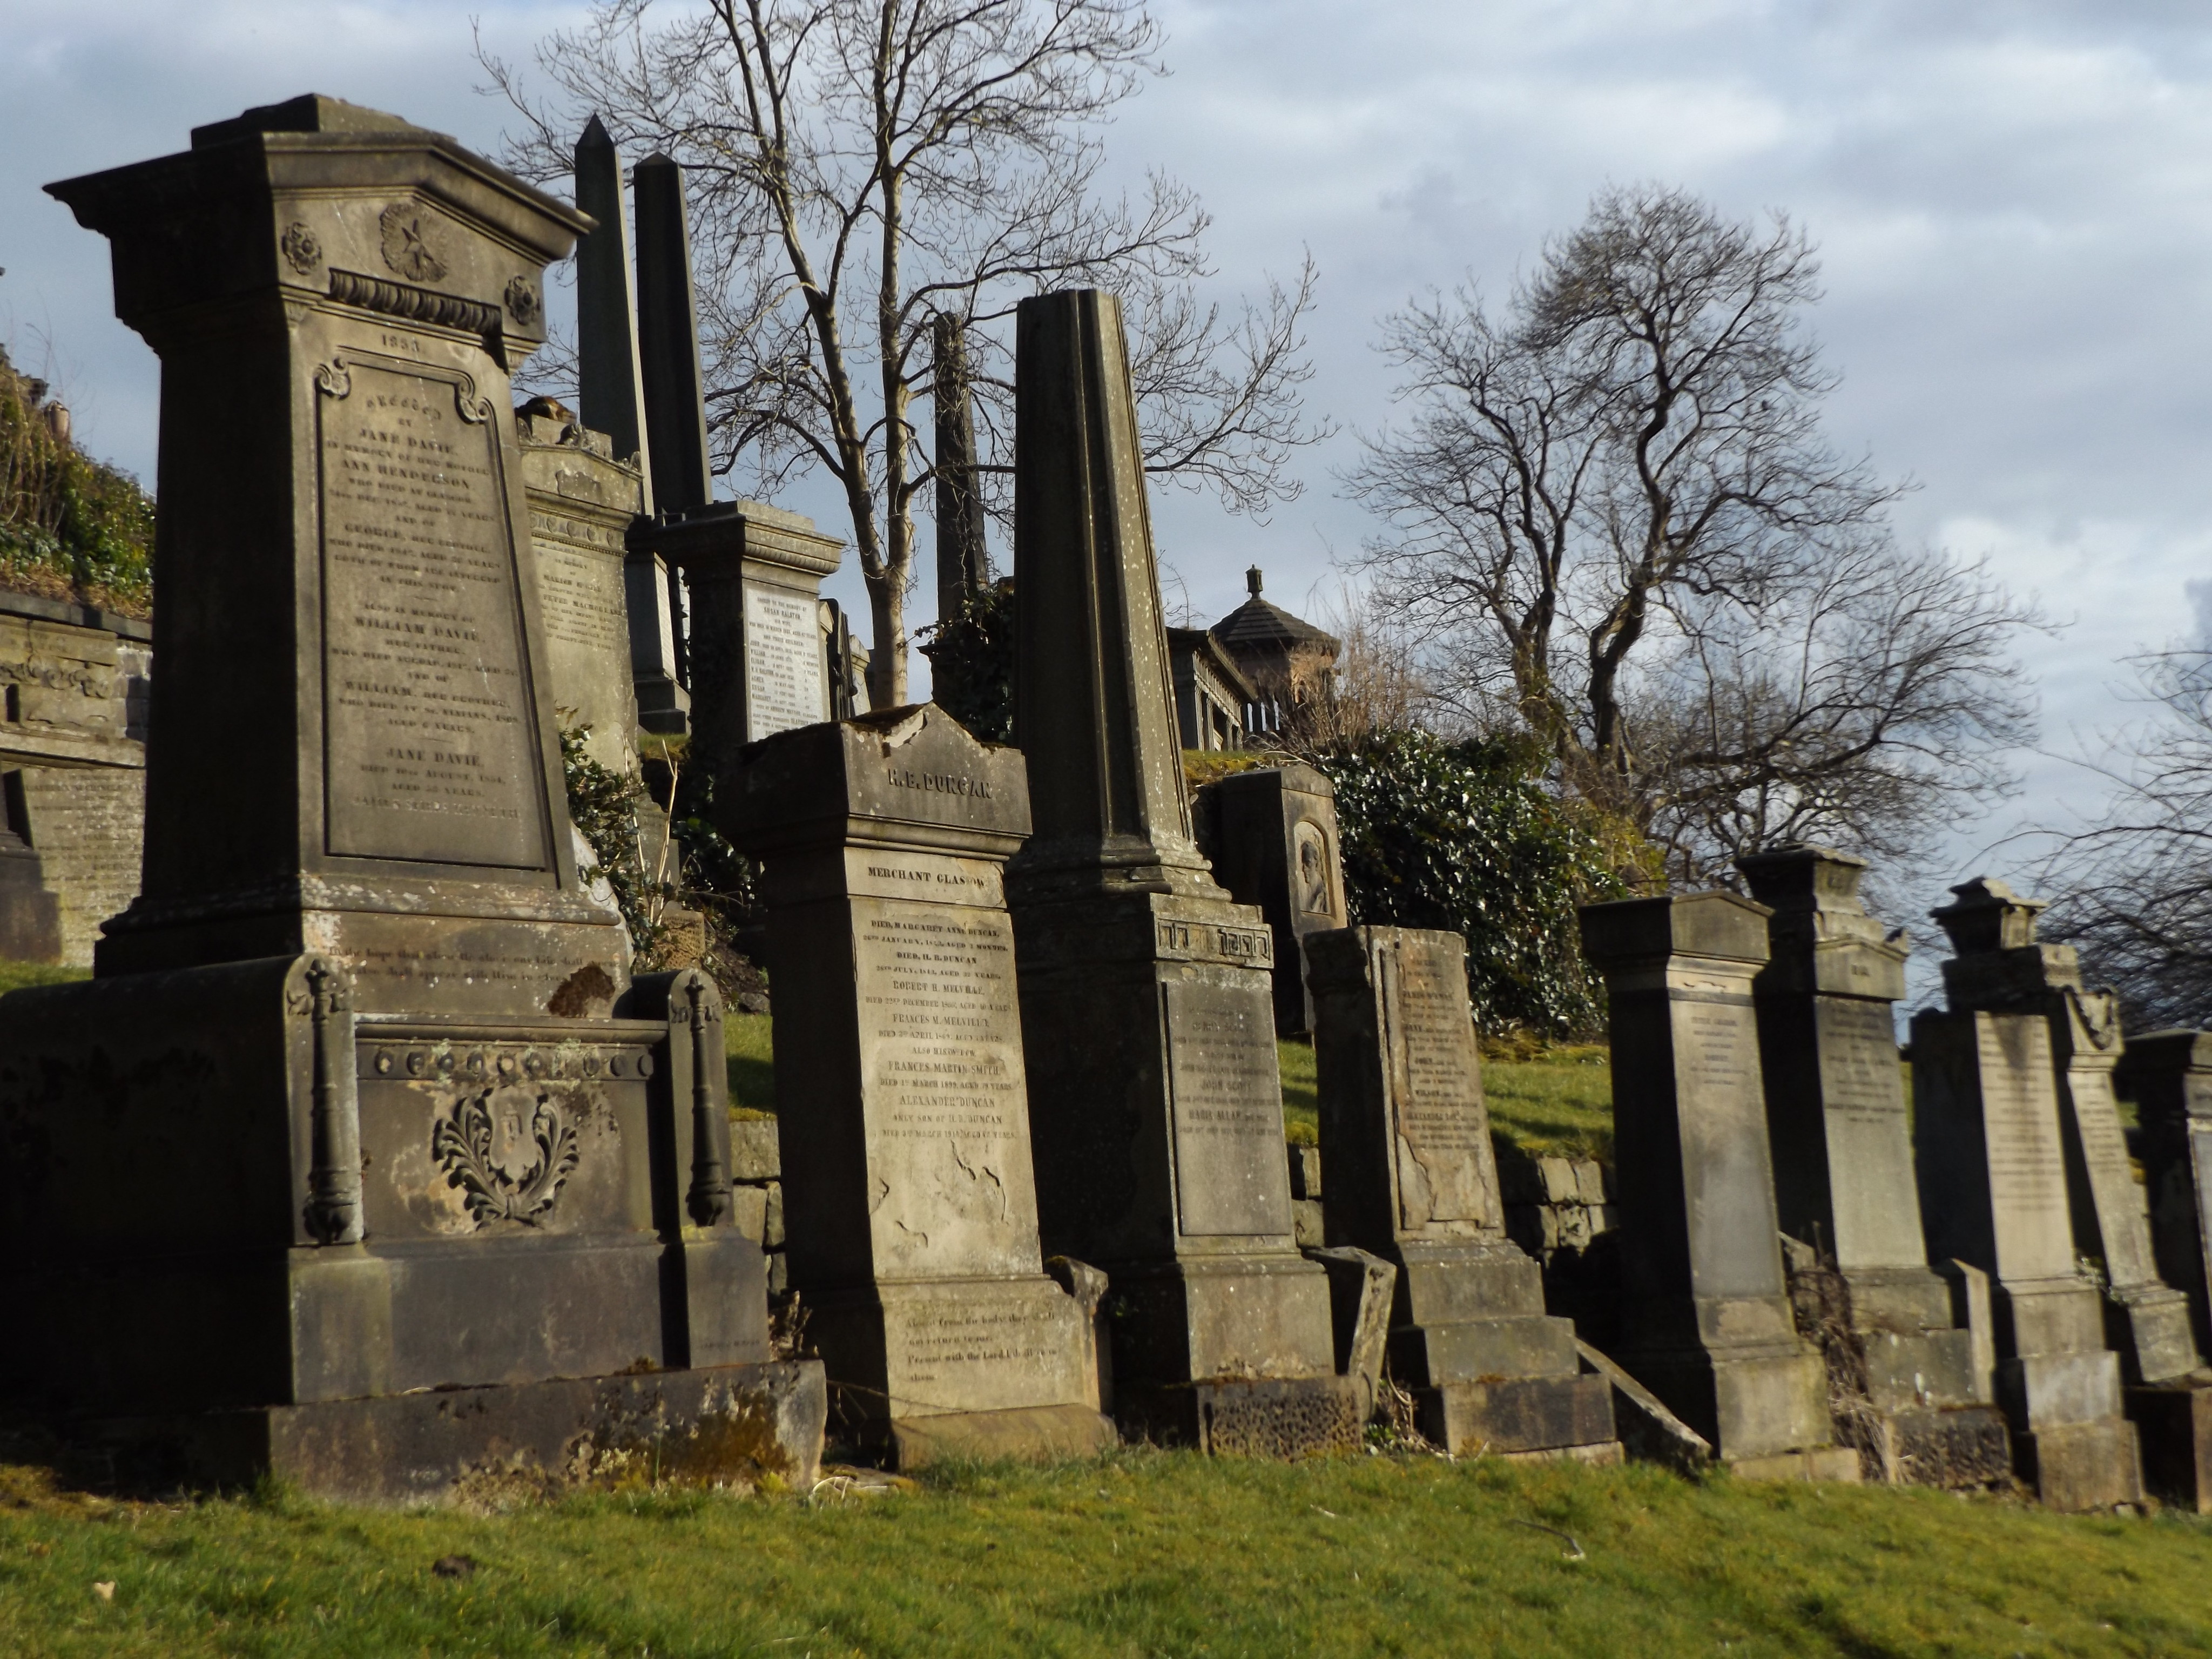 Tombs in the Necropolis II, Glasgow, 1 April 2018